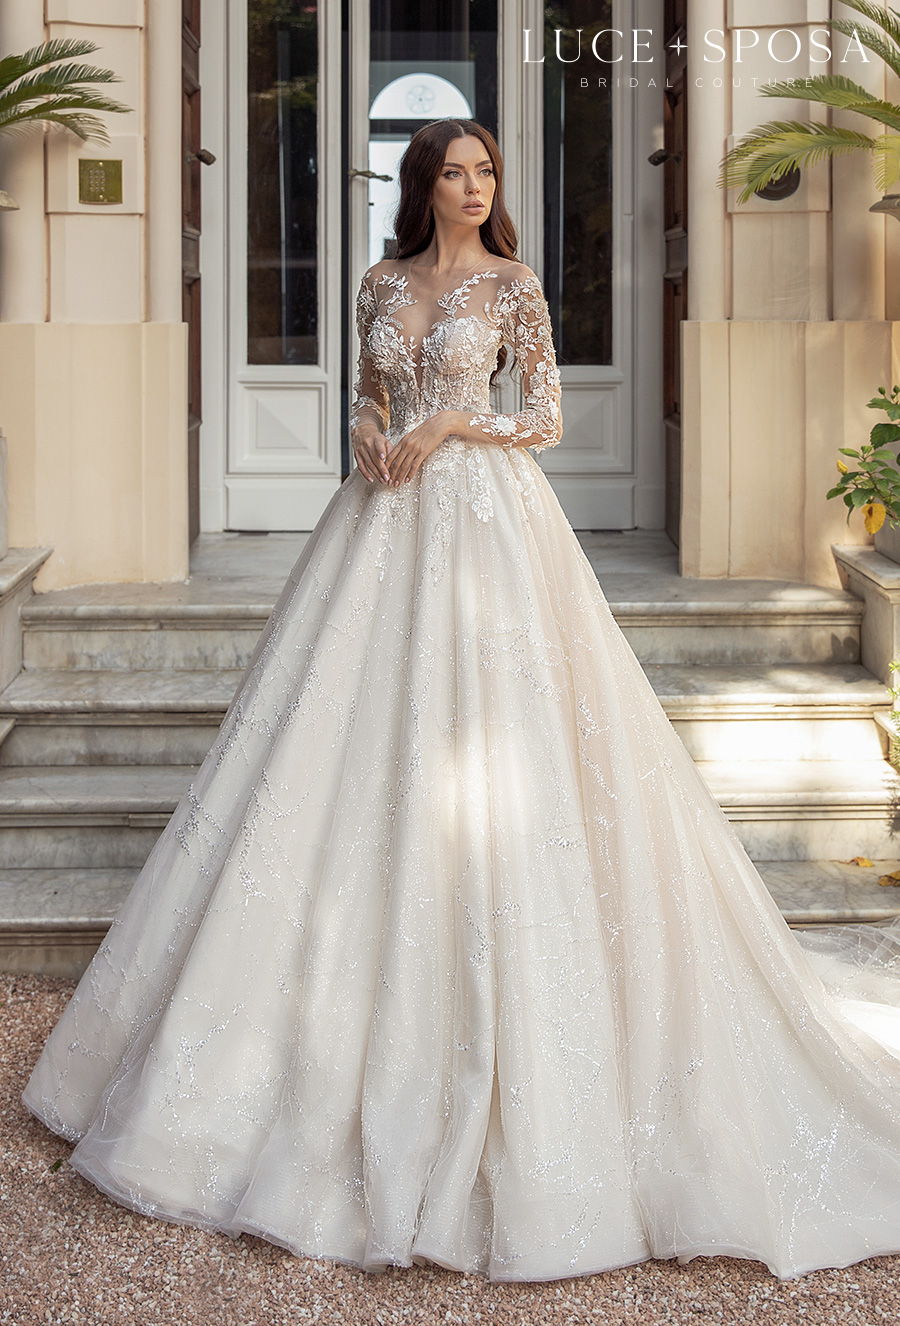 Luce Sposa 2021 “Sorrento | Italy” Wedding Dresses | Wedding Inspirasi